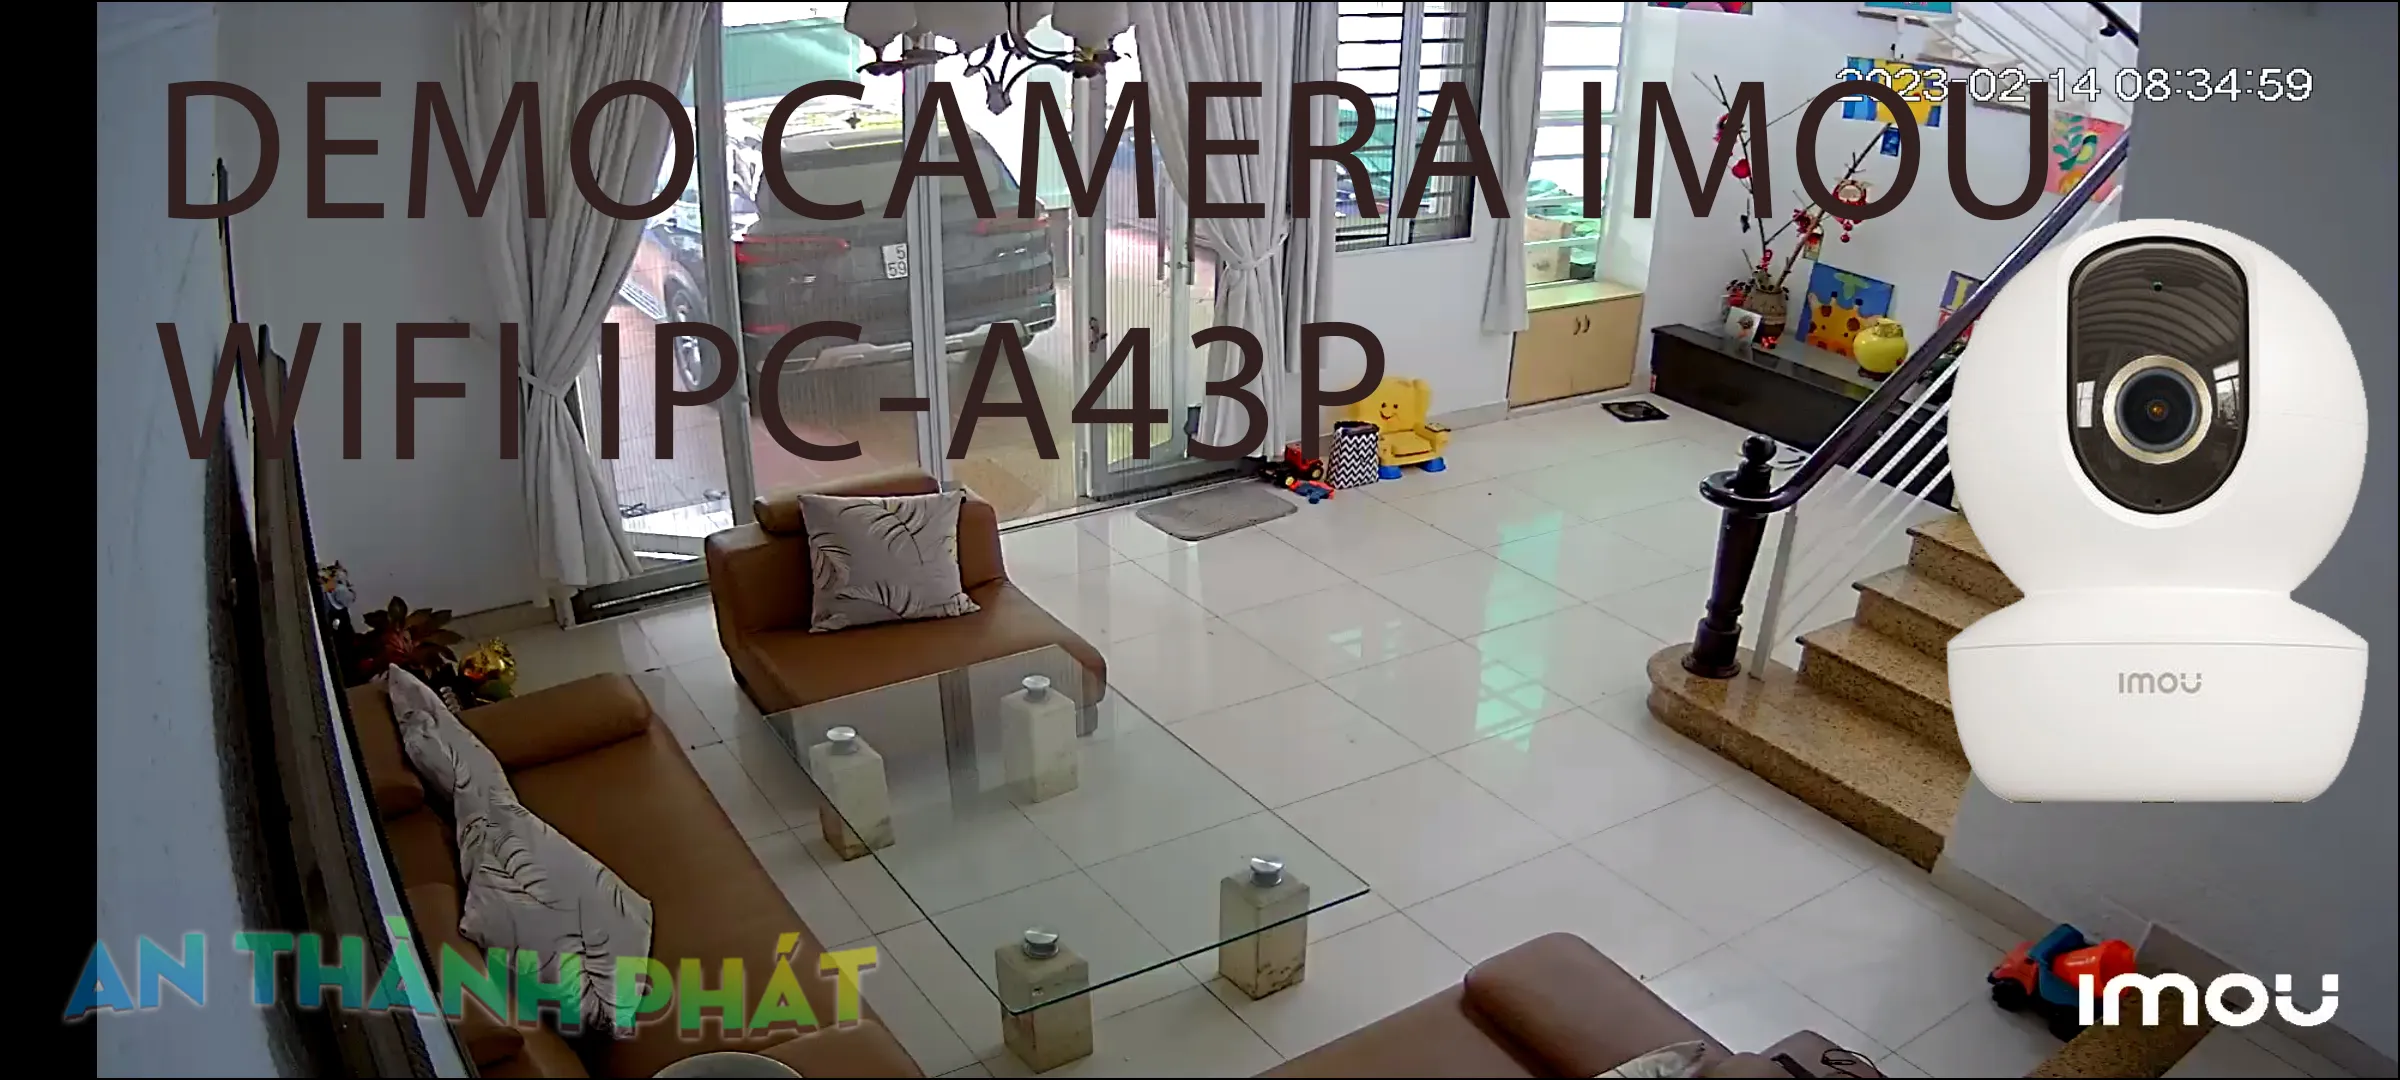 demo camera ip wifi ipc-a43p